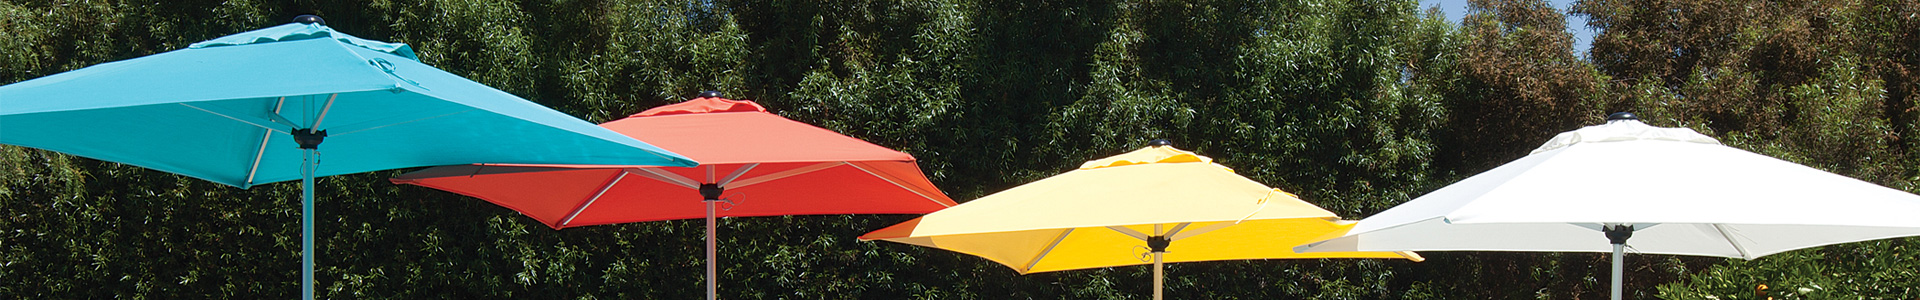 8' x 10' Auto Tilt Umbrella